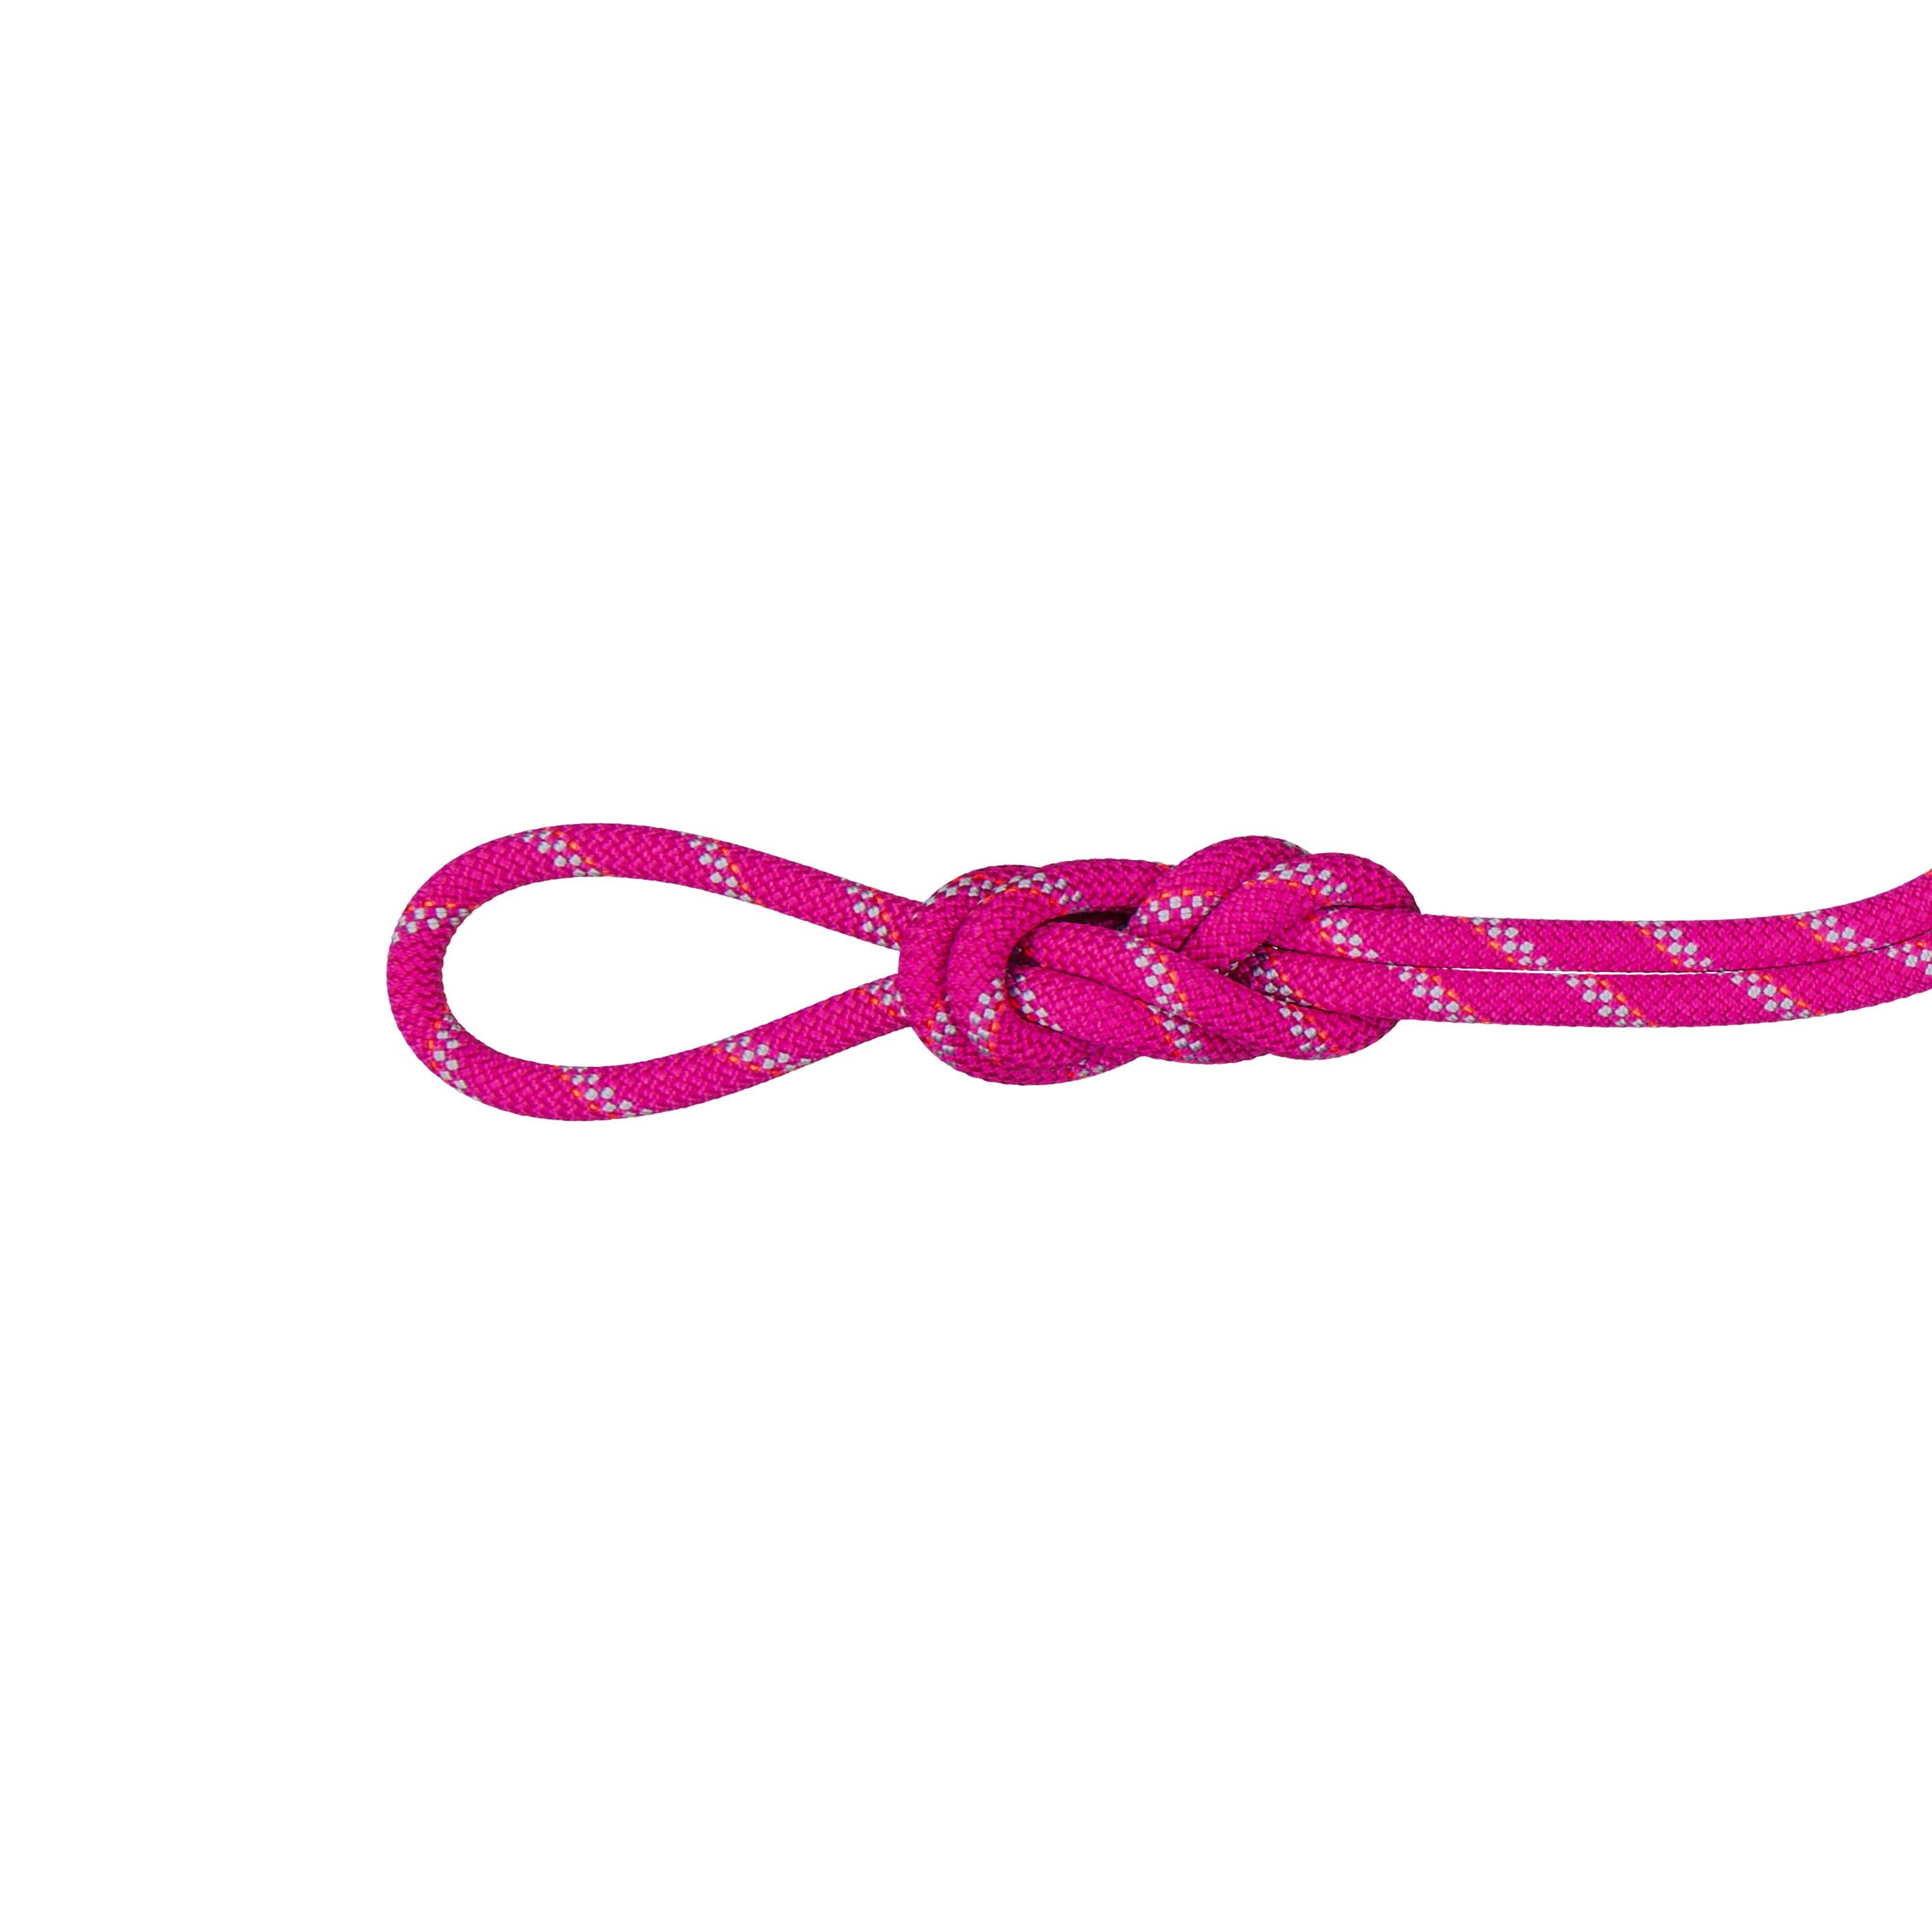 8.0 Alpine Dry Rope - Dry Standard, pink-zen, 50 m thumbnail